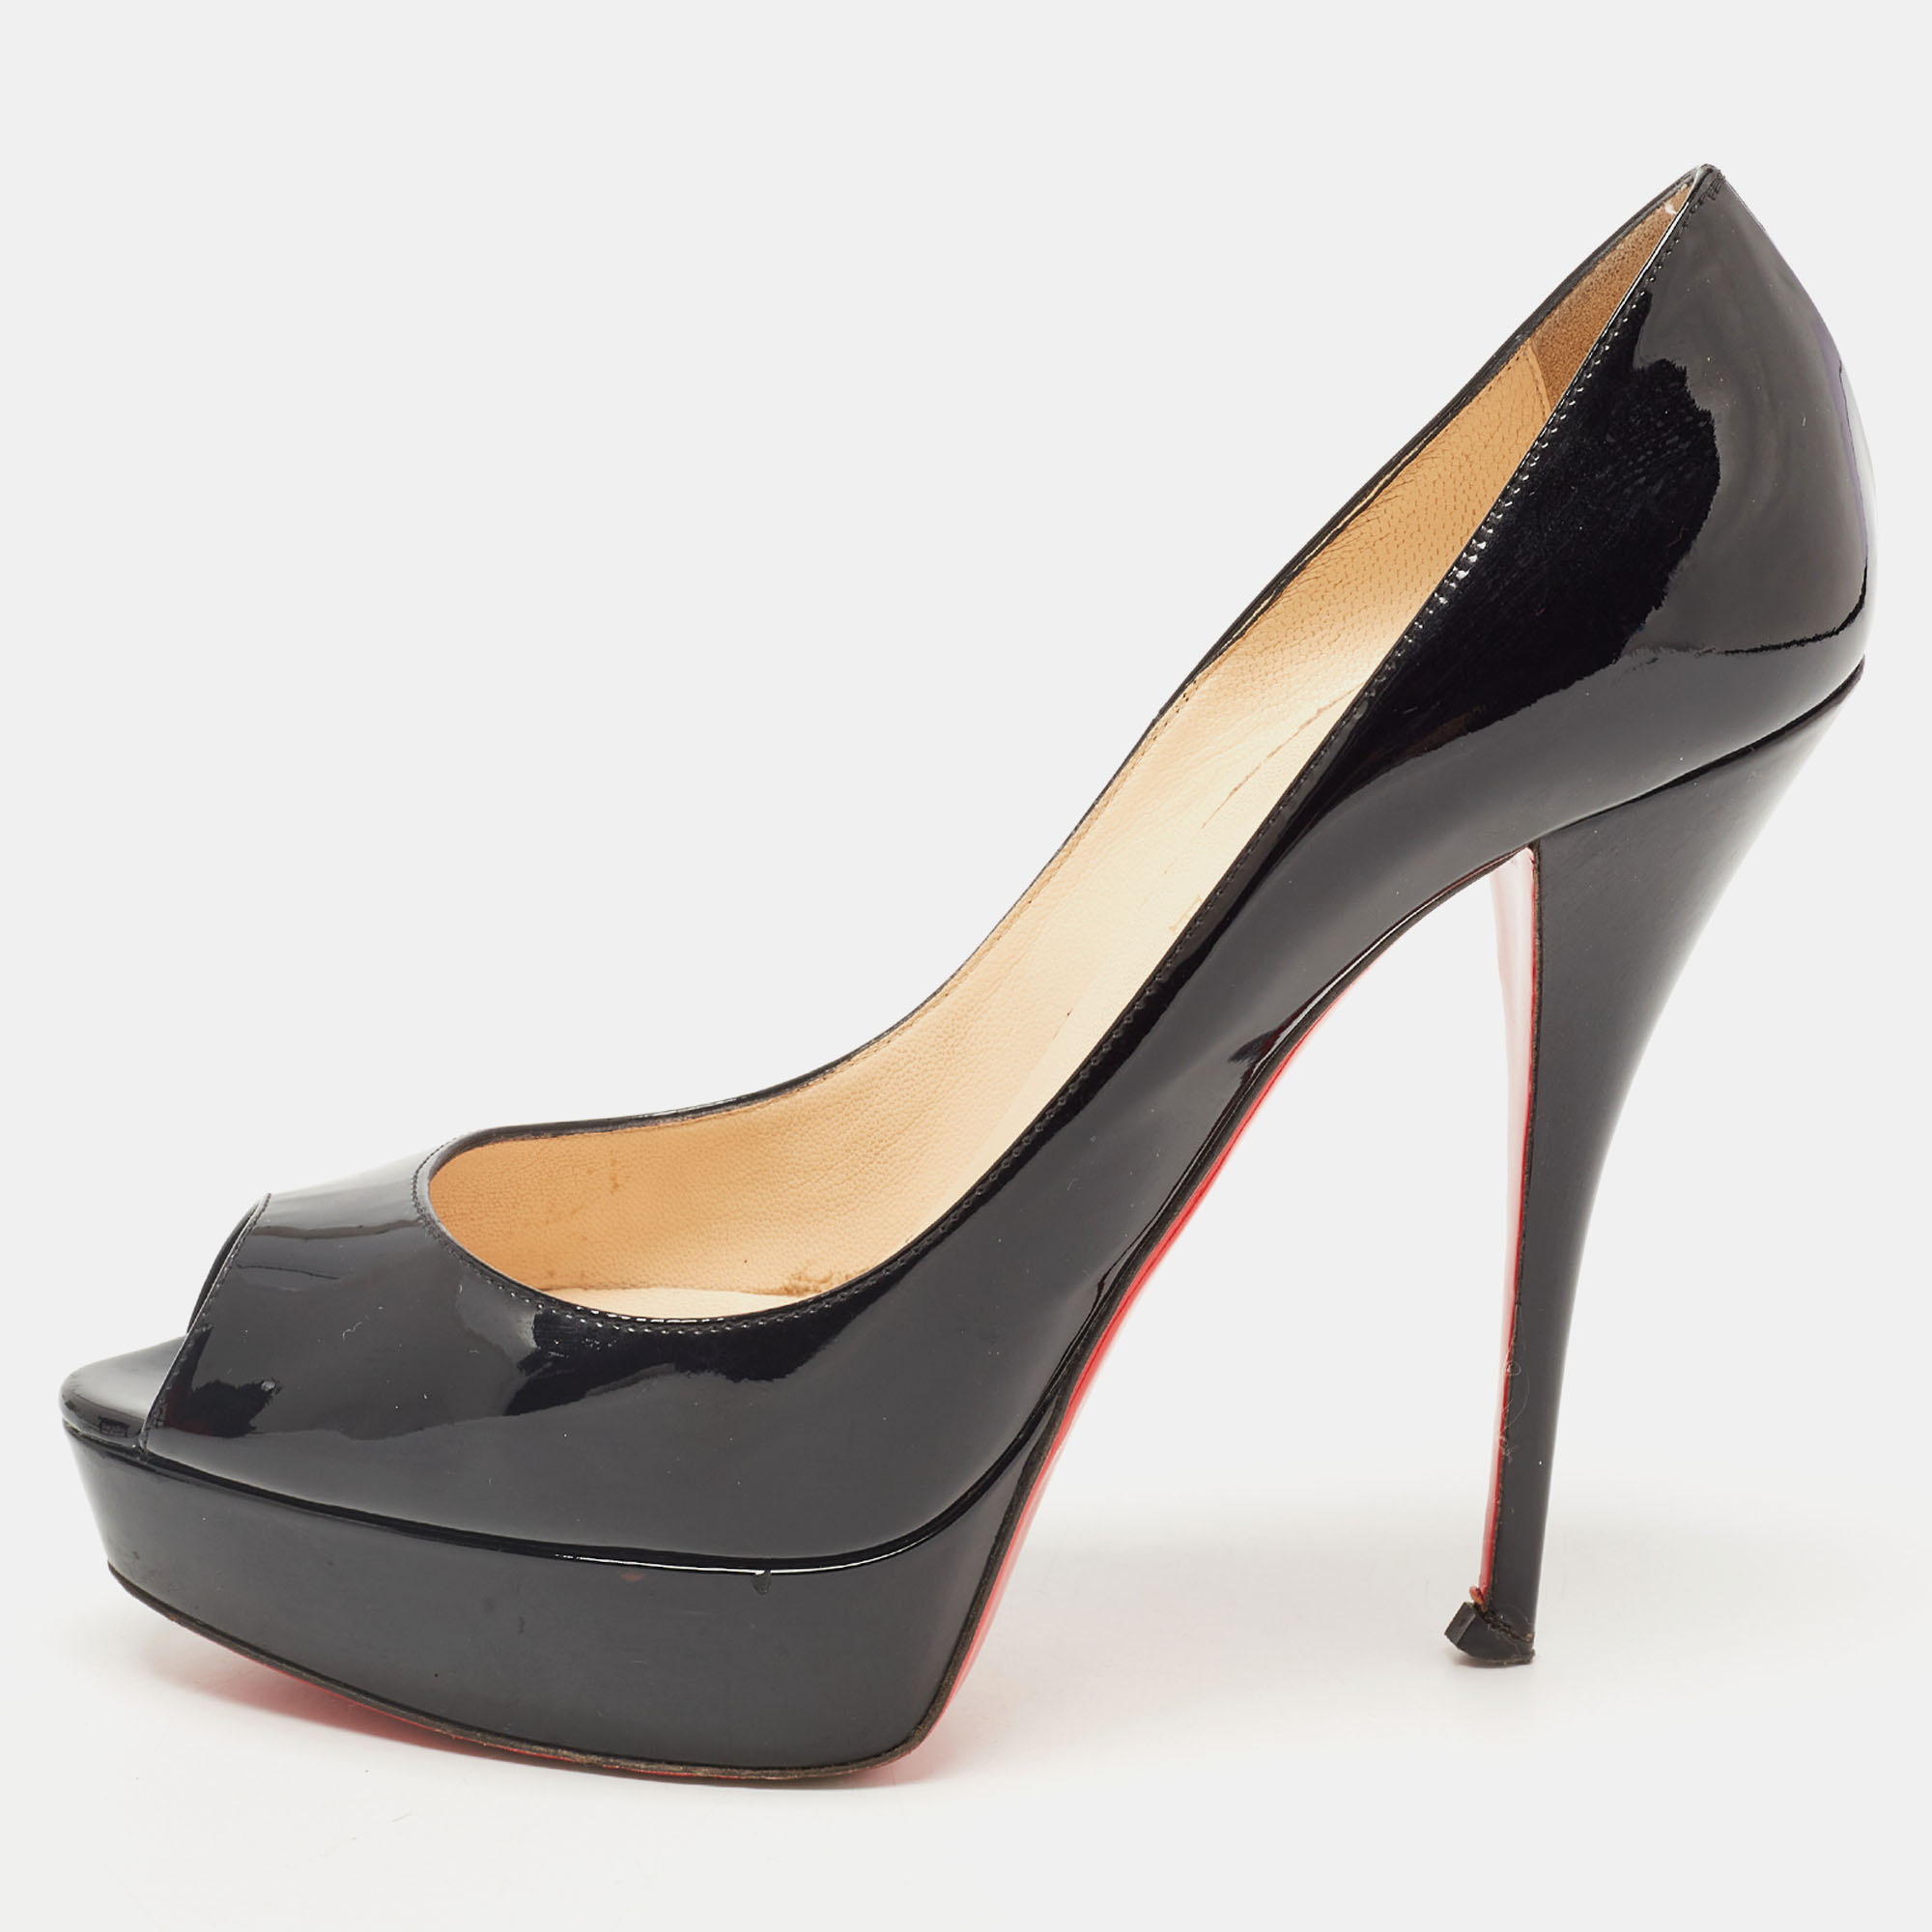 Christian louboutin black patent leather troca peep toe platform pumps size 39.5